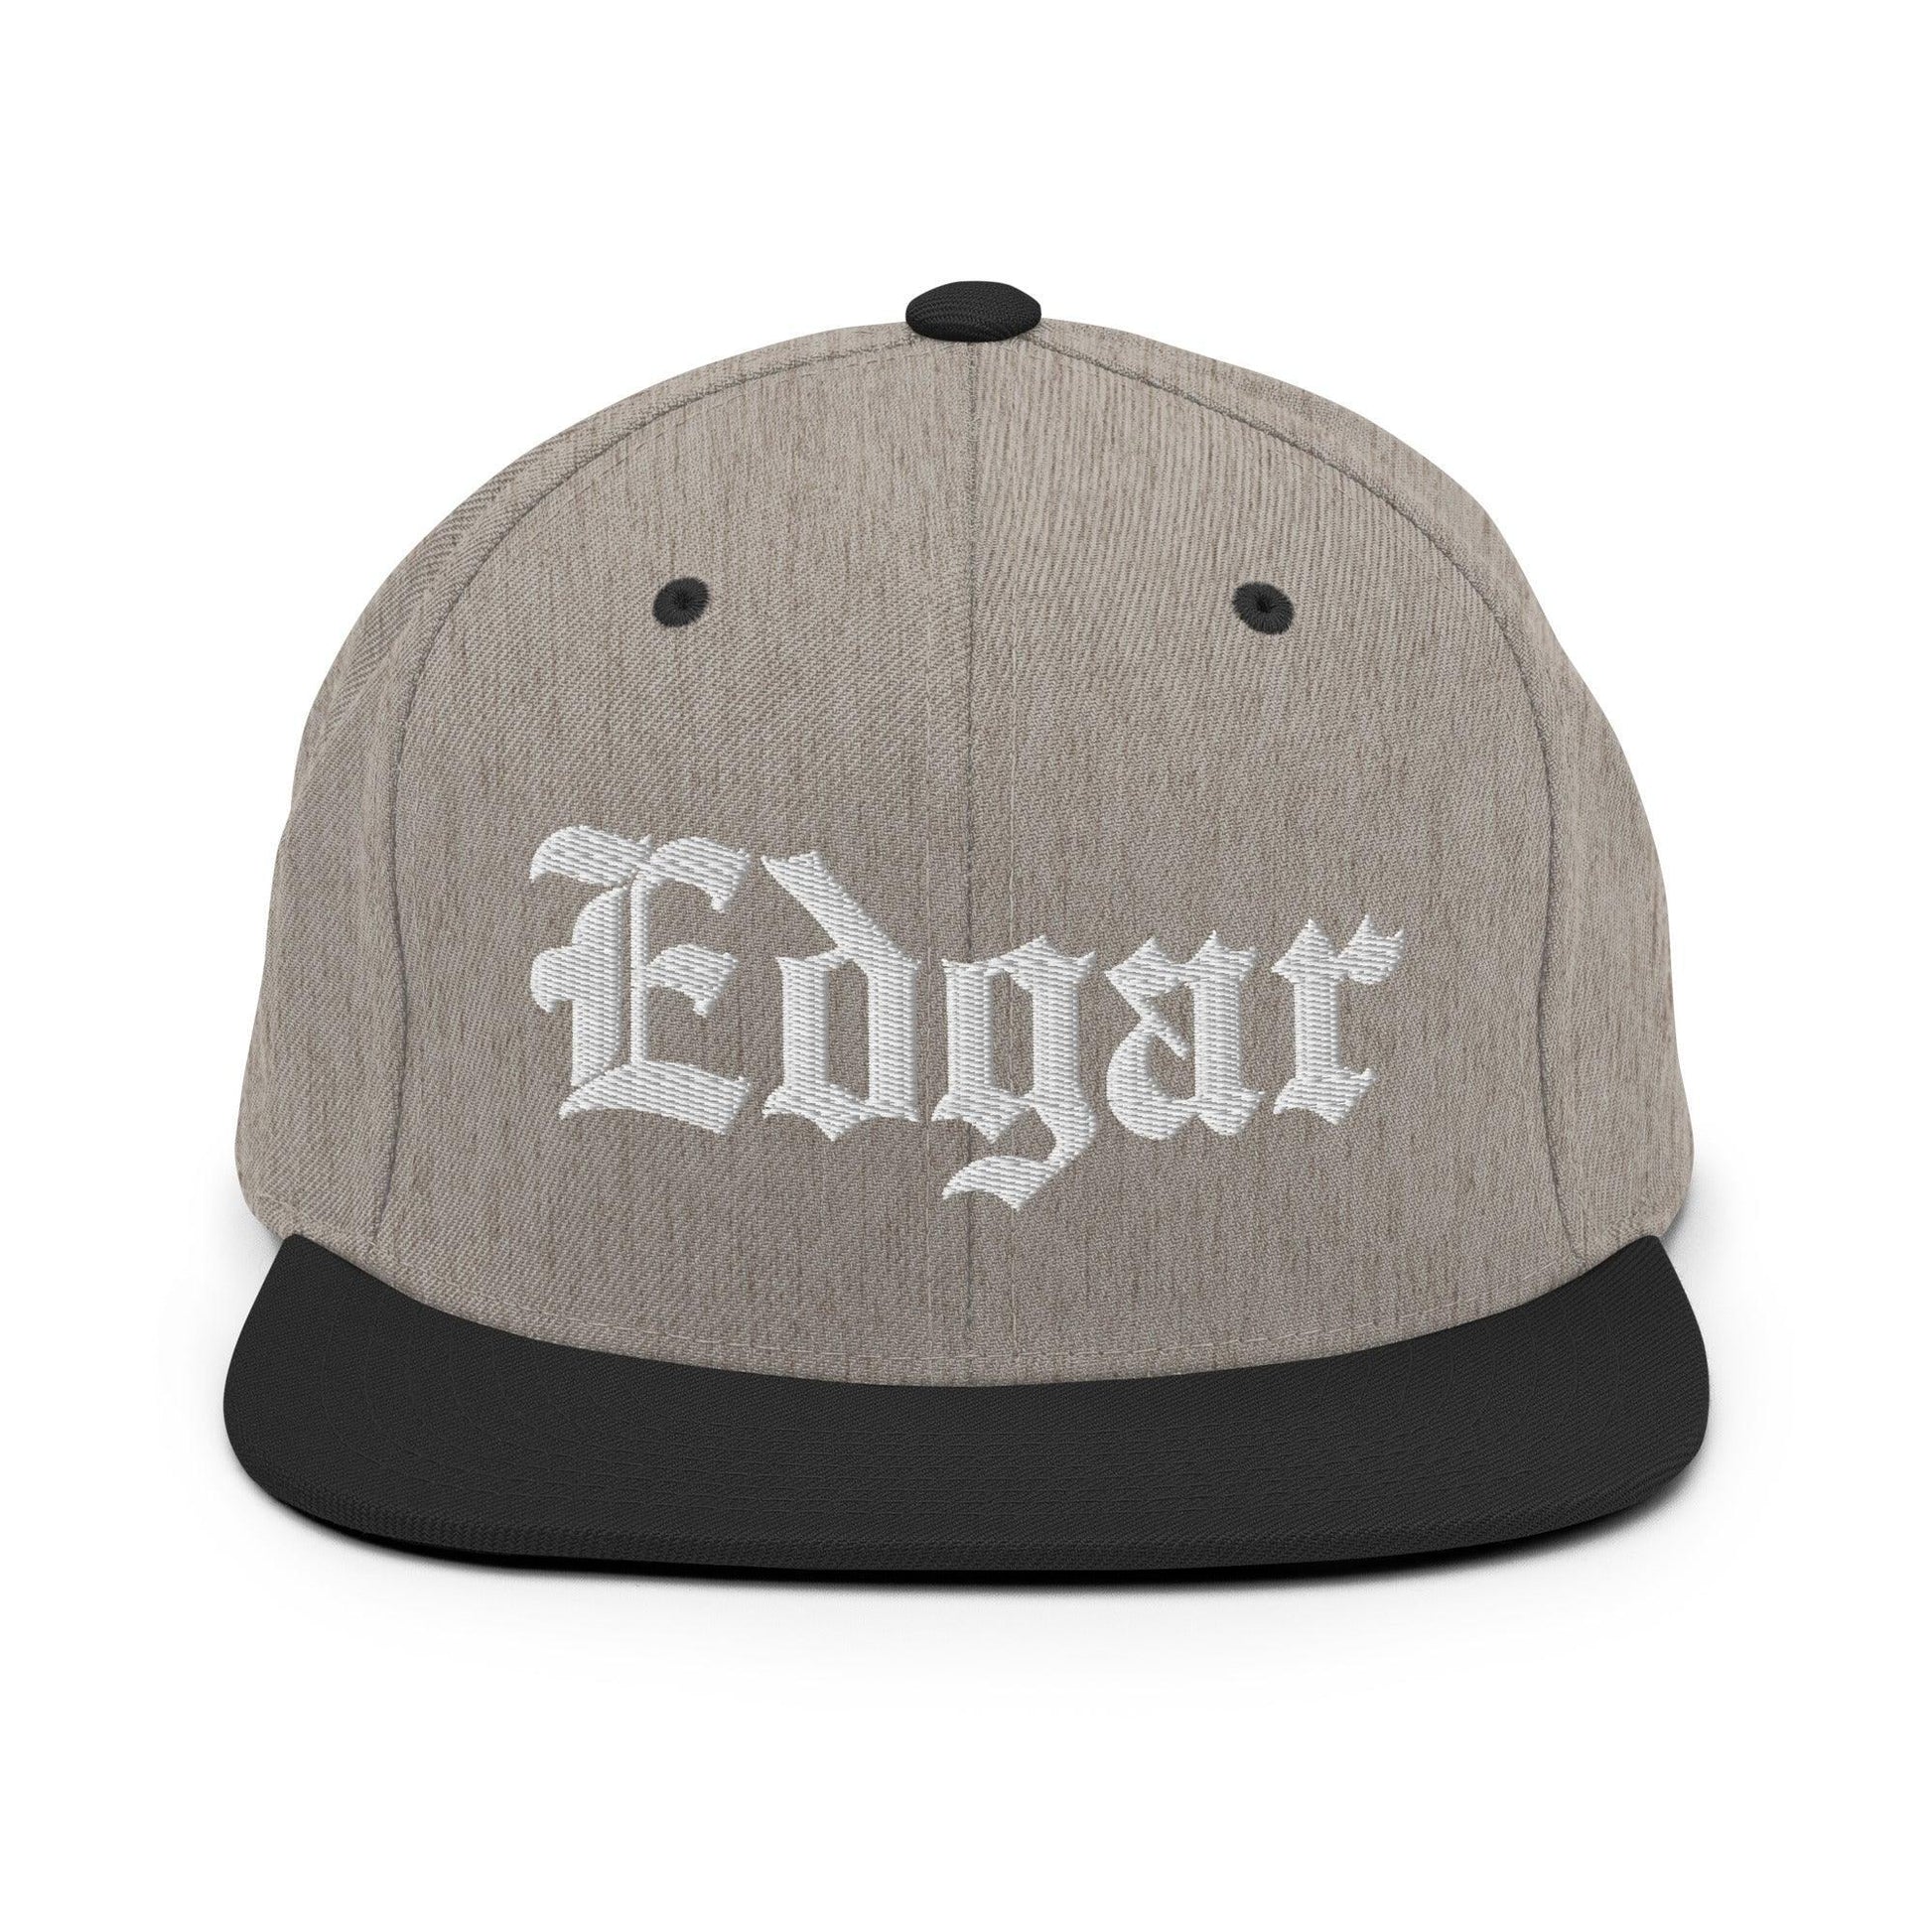 Edgar Old English Snapback Hat Heather/Black